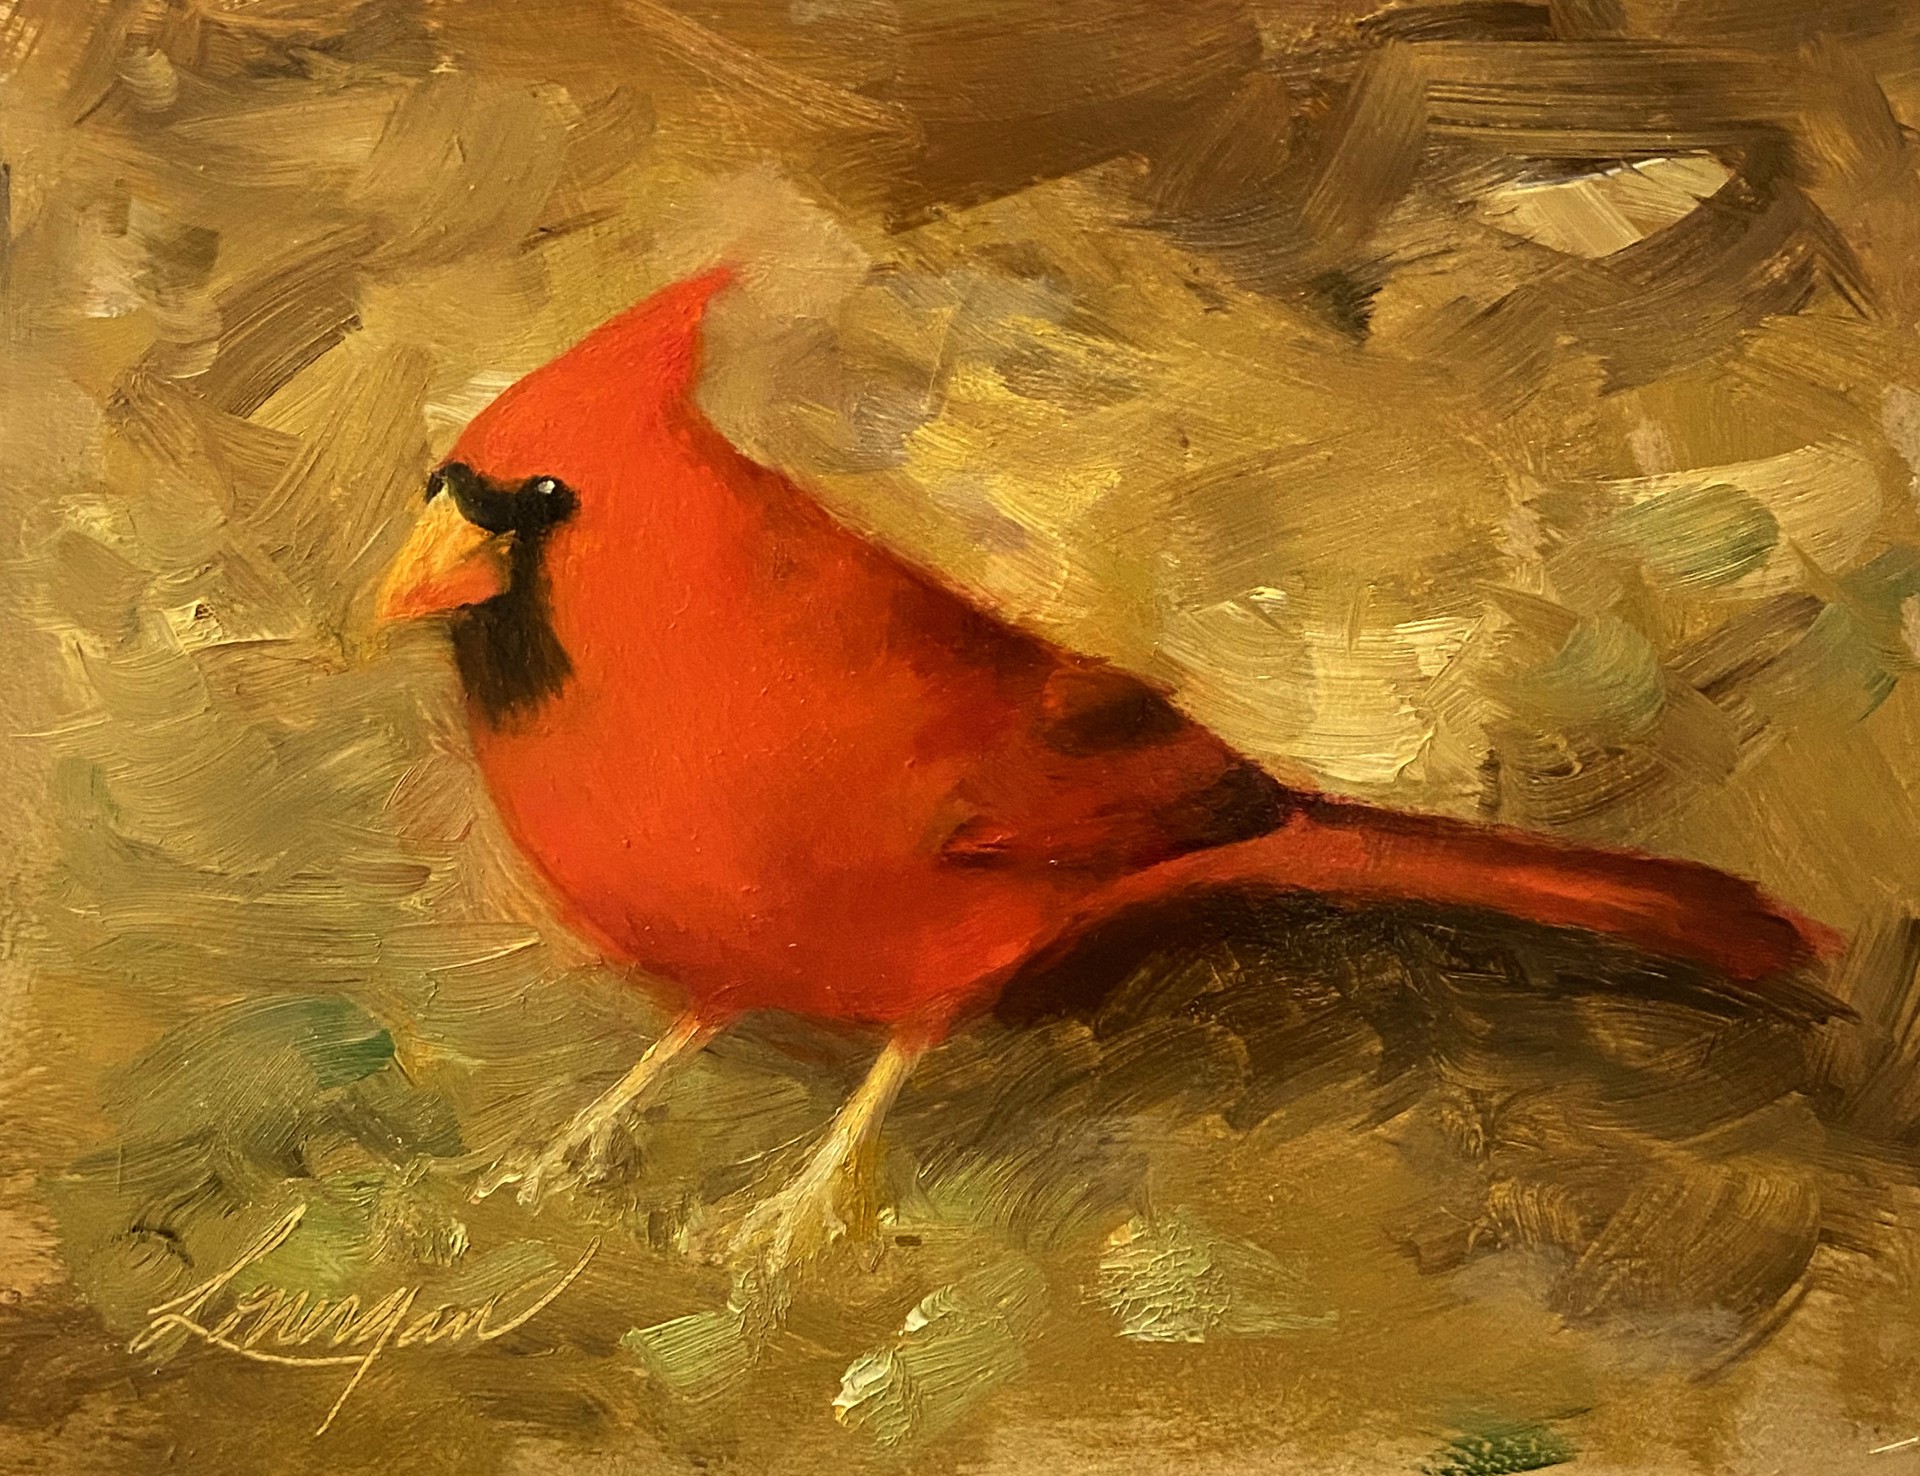 Bird in Sunlight by John Lonergan